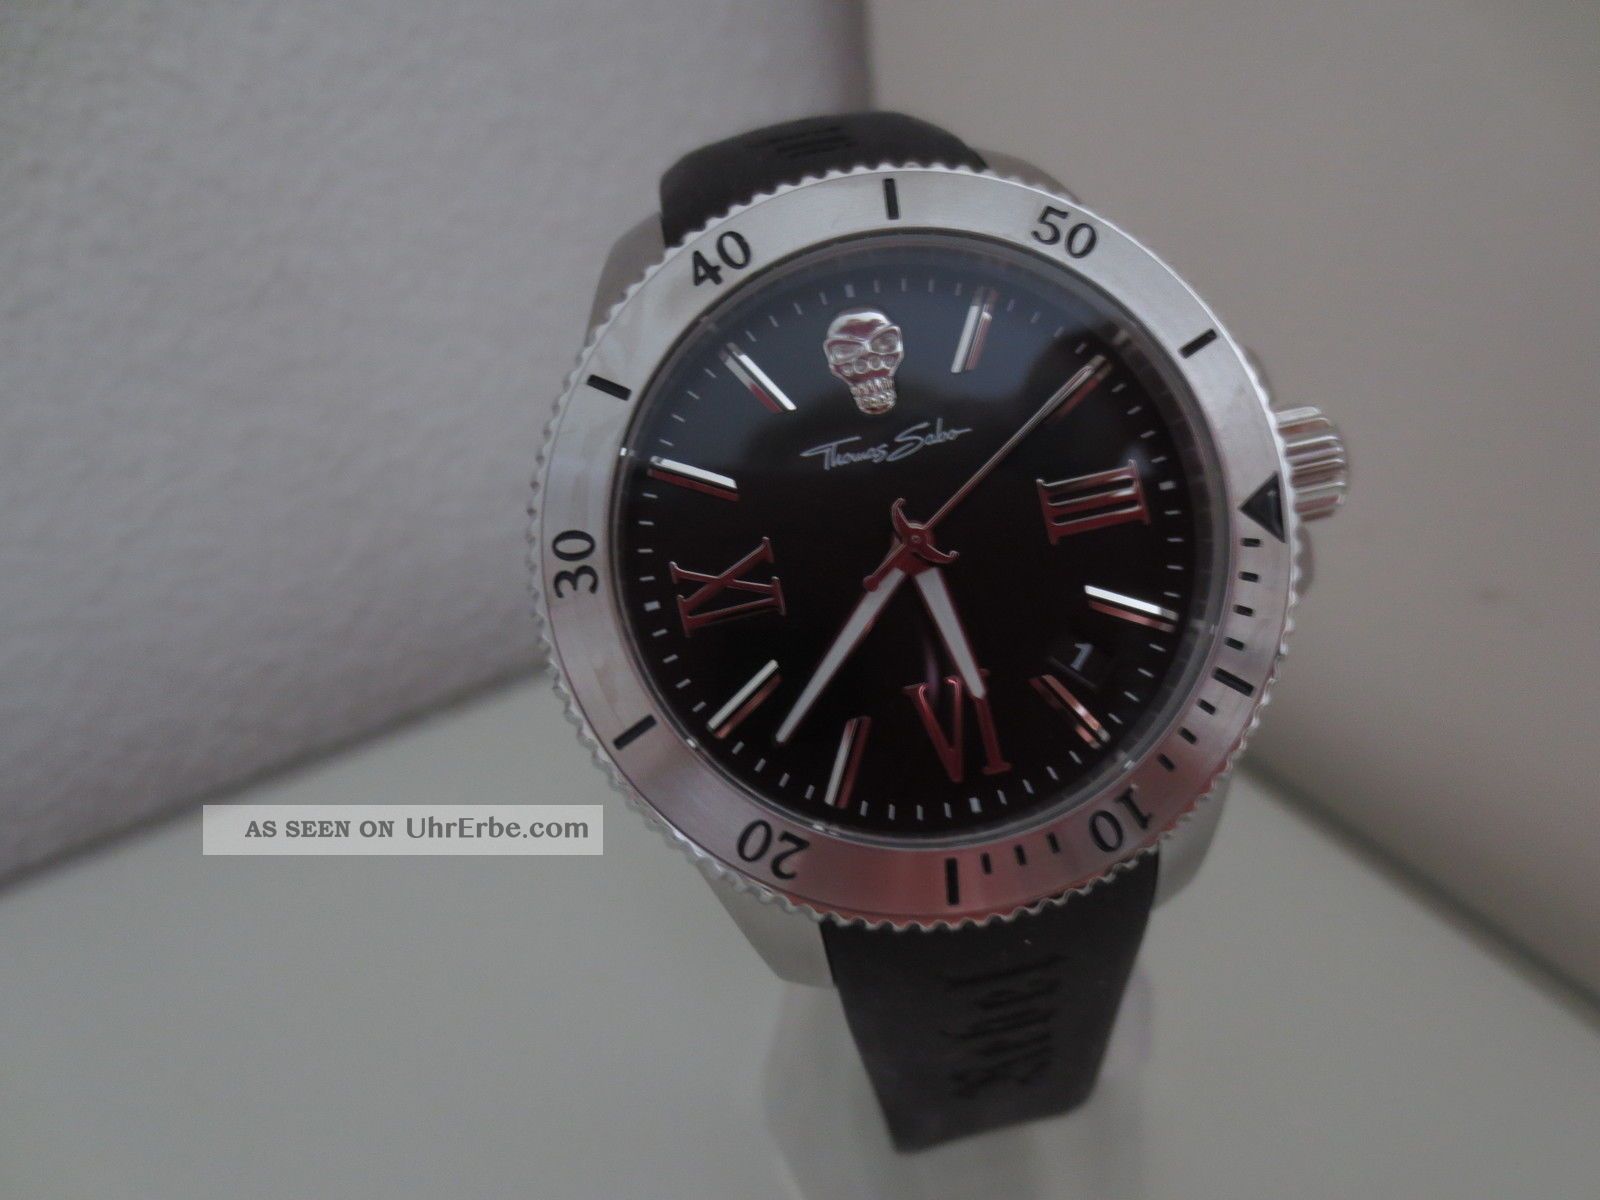 Thomas Sabo Rebel At Heart Uhr Wa0020 Uhren Schwarz Herren Armband Uhr Armbanduhren Bild